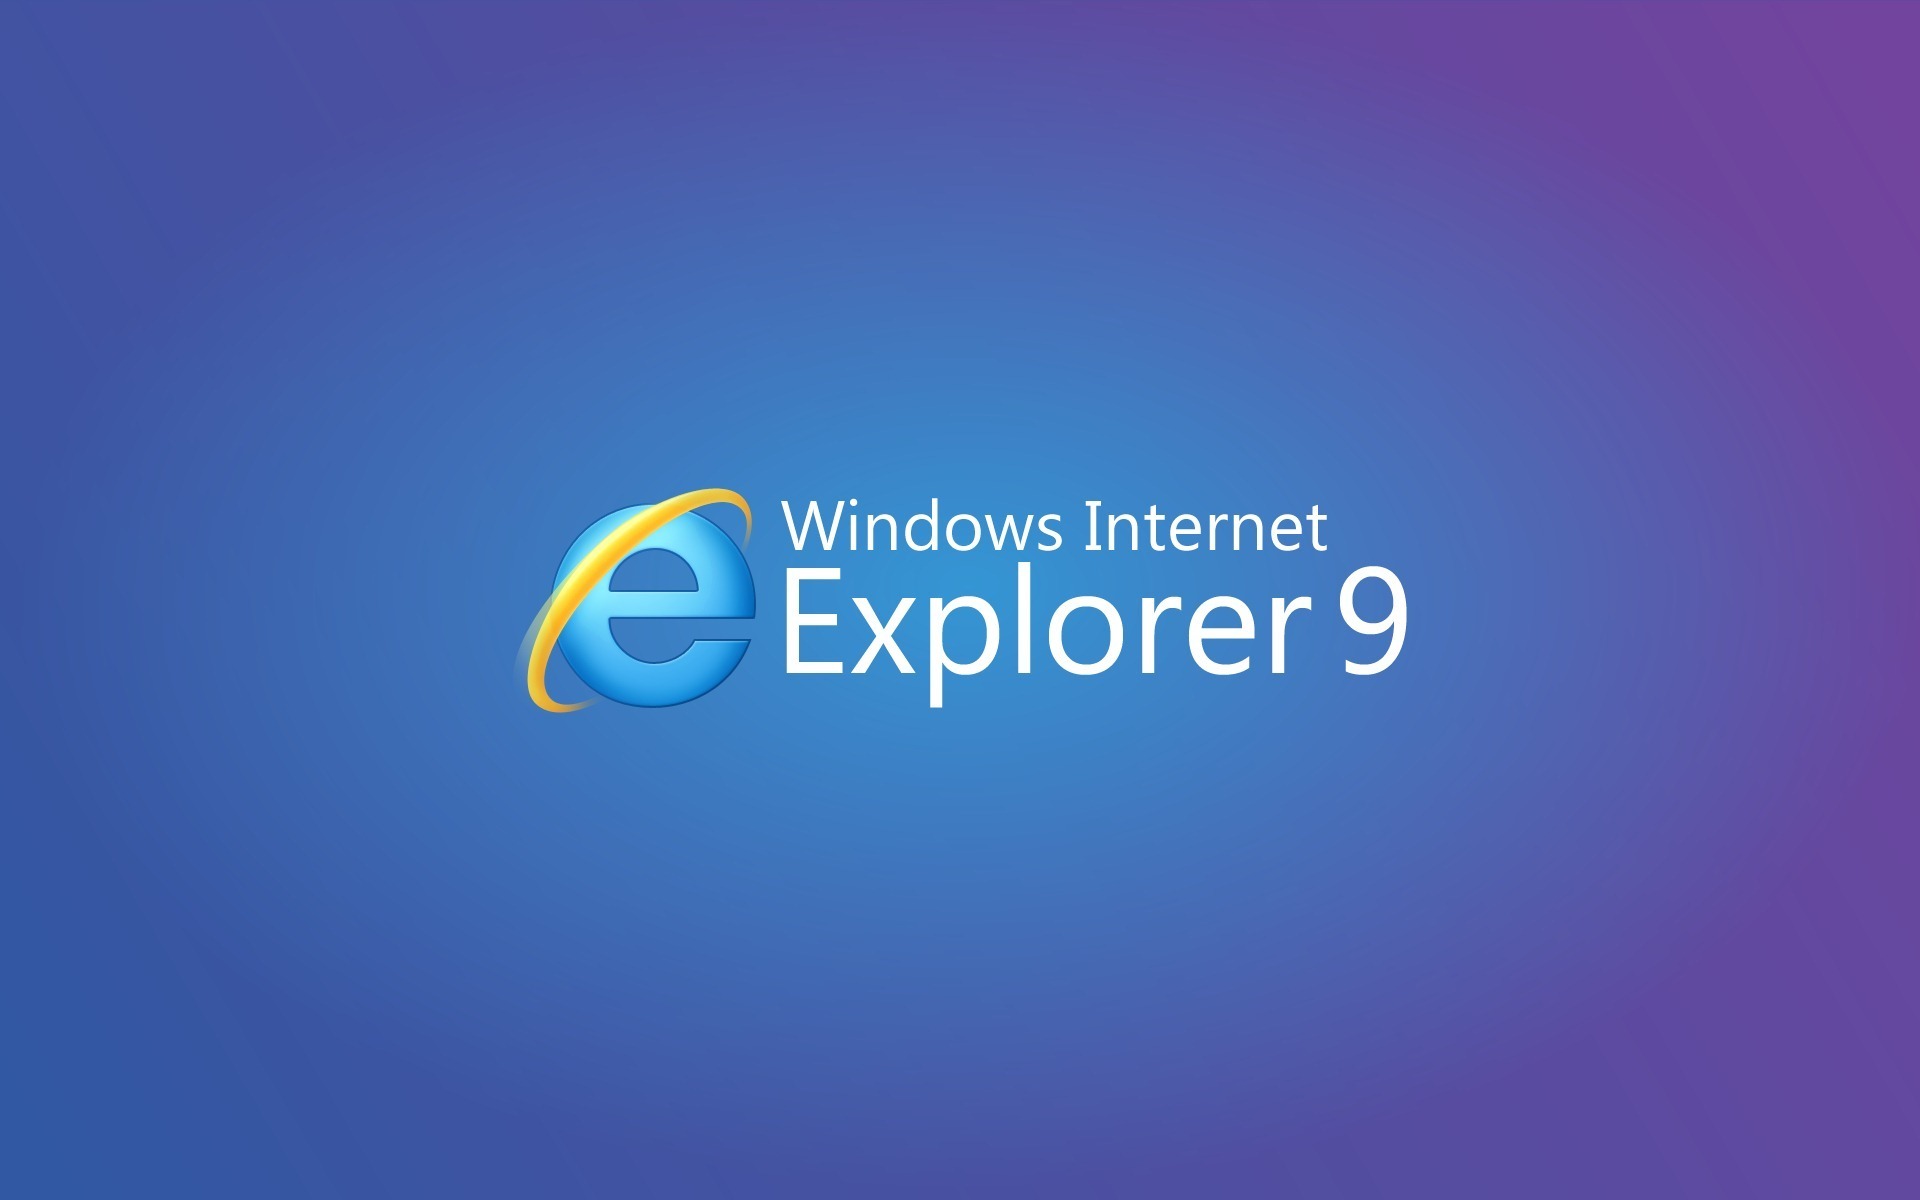 Internet Explorer Images Internet Explorer Wallpapers Hd HD Wallpapers Download Free Images Wallpaper [wallpaper981.blogspot.com]